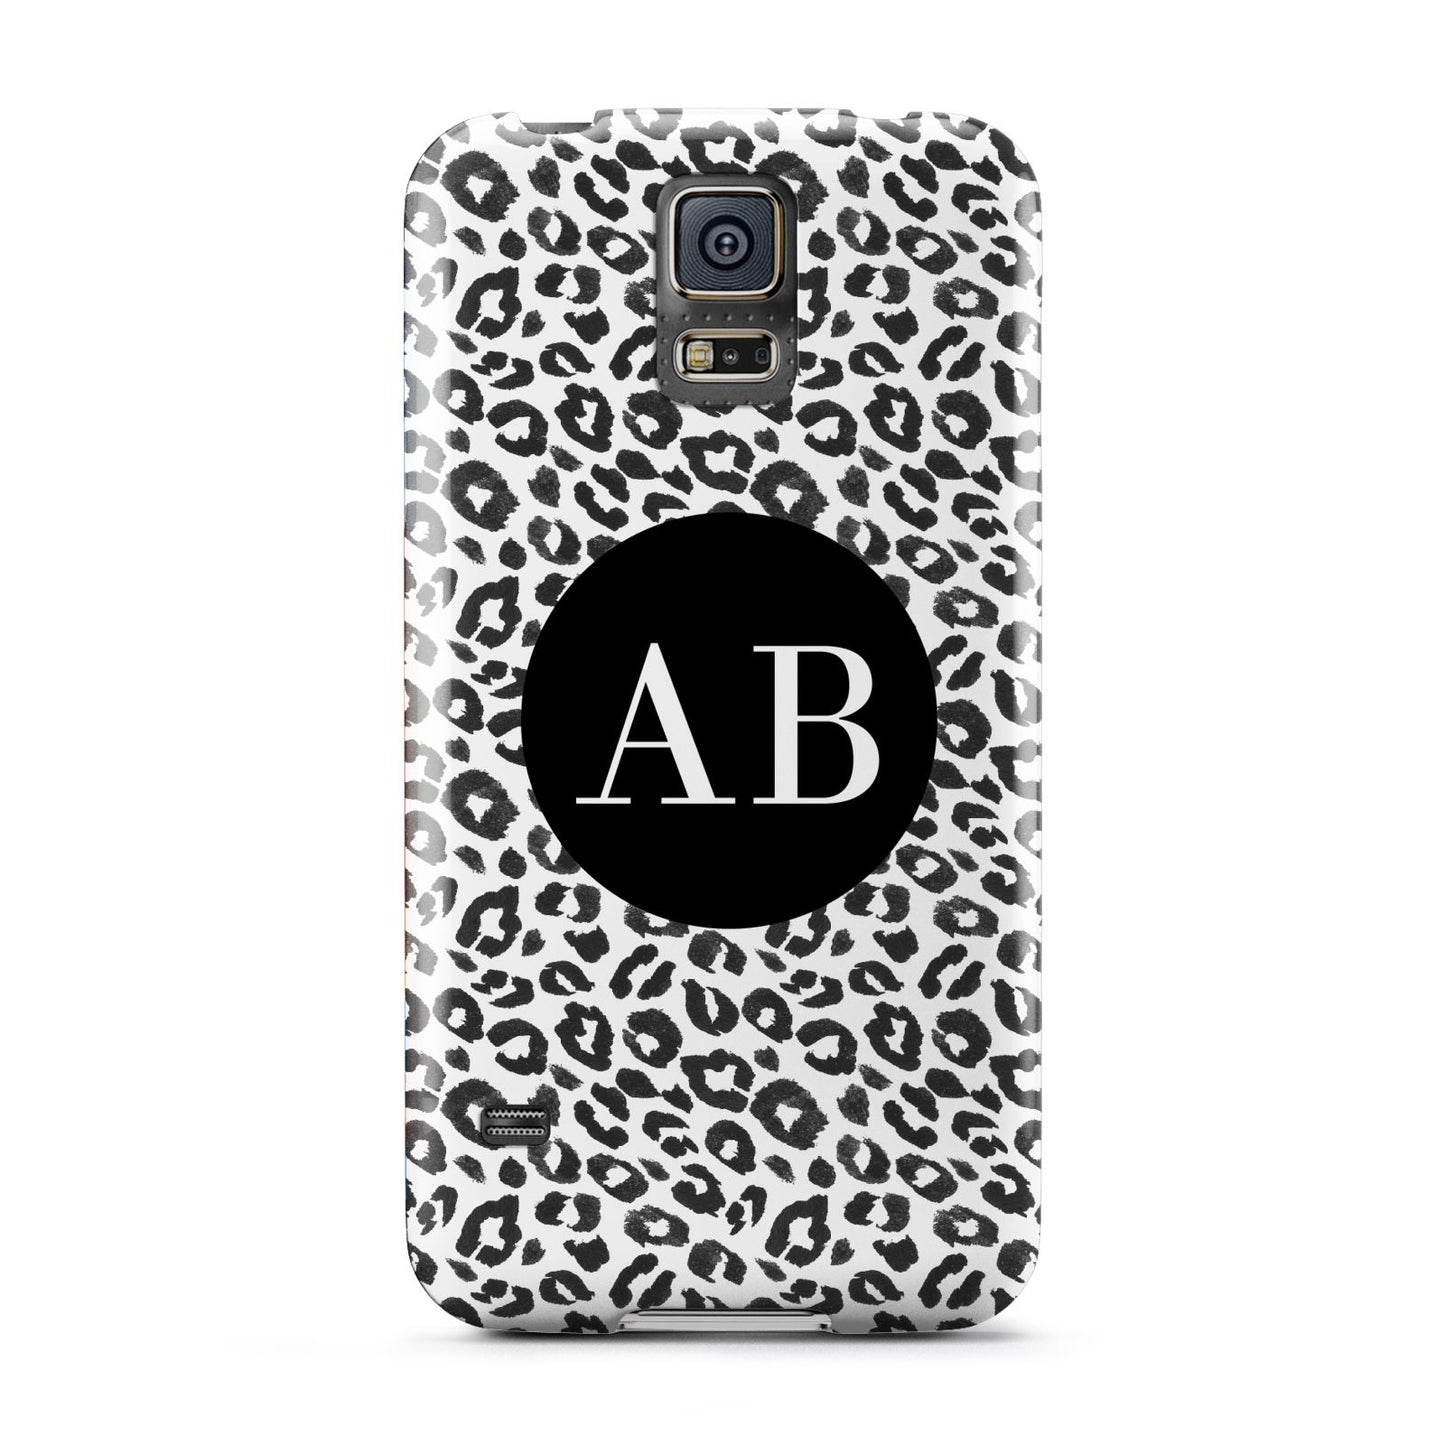 Leopard Print Black and White Samsung Galaxy S5 Case